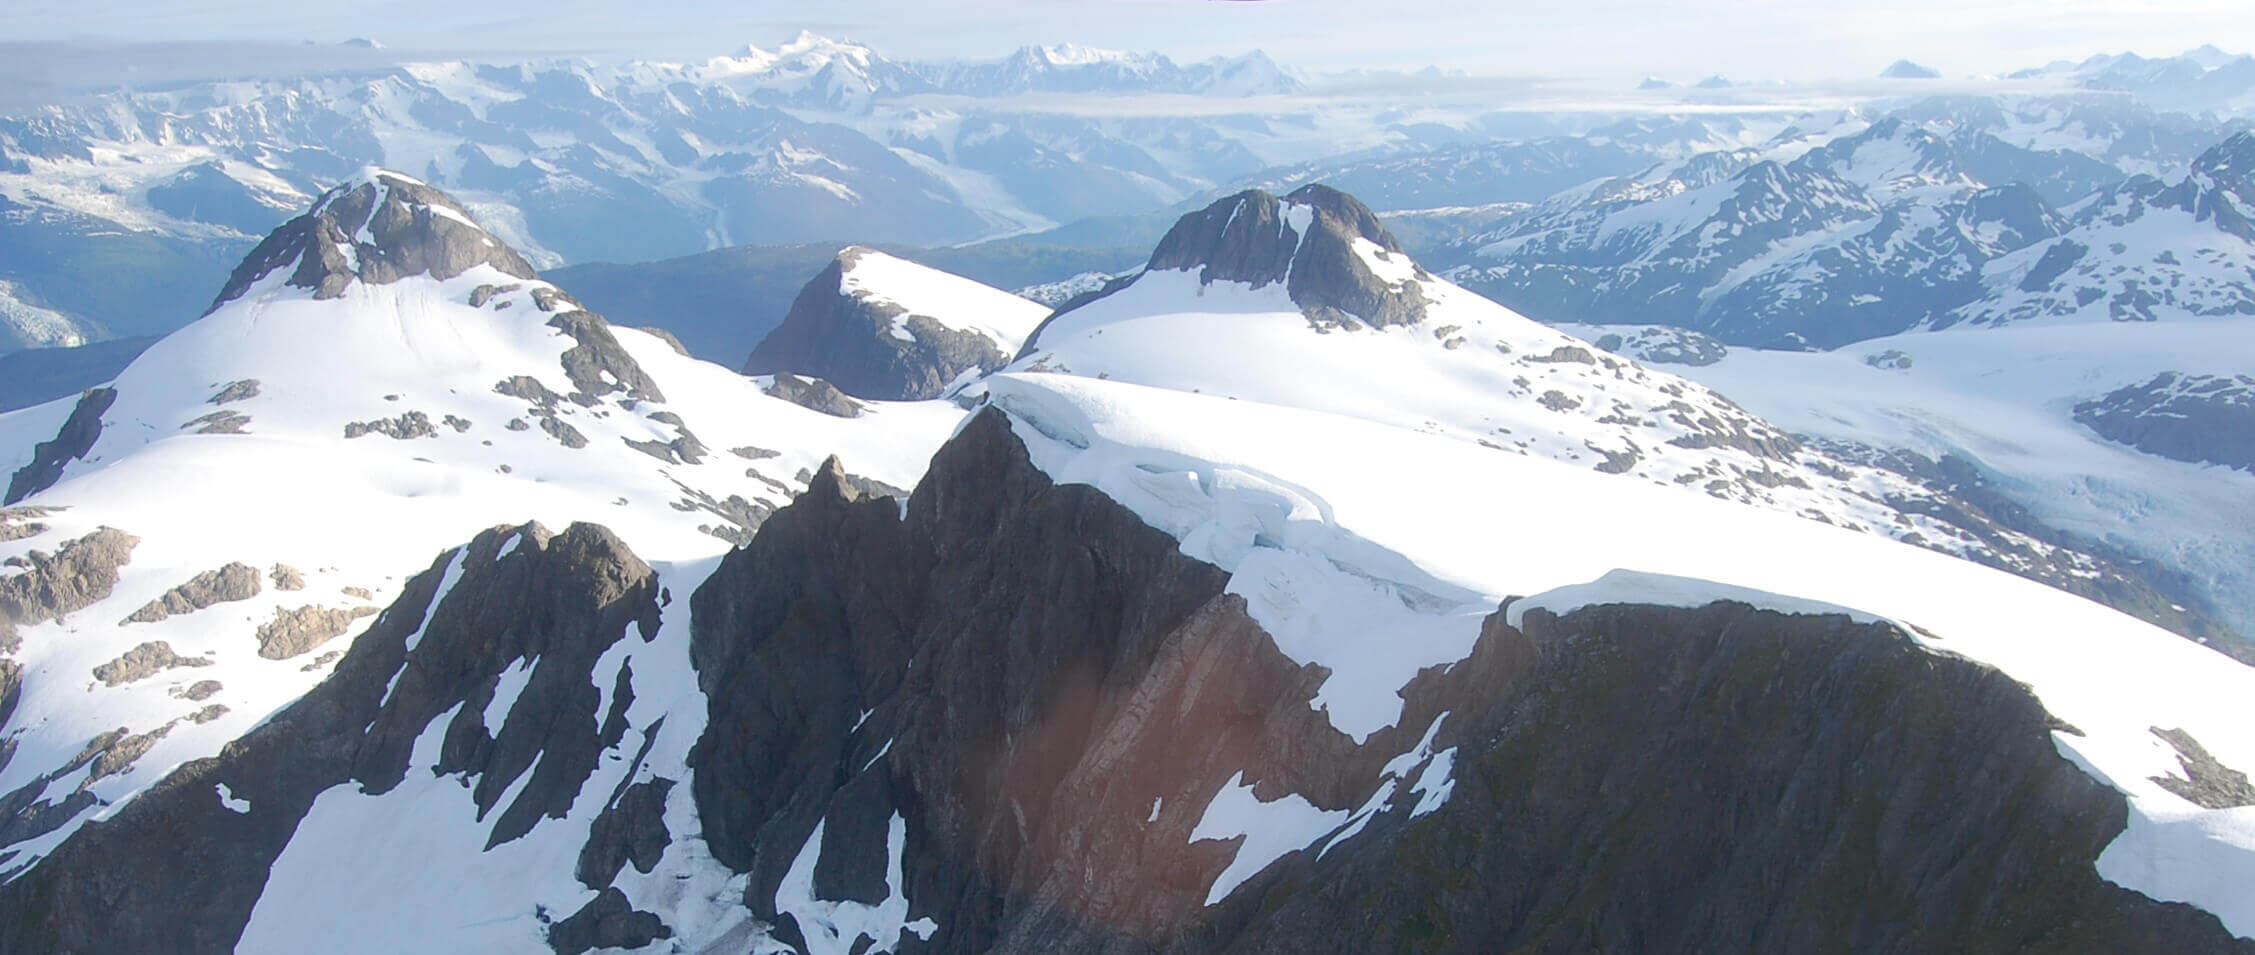 Rugged Alaska mountains